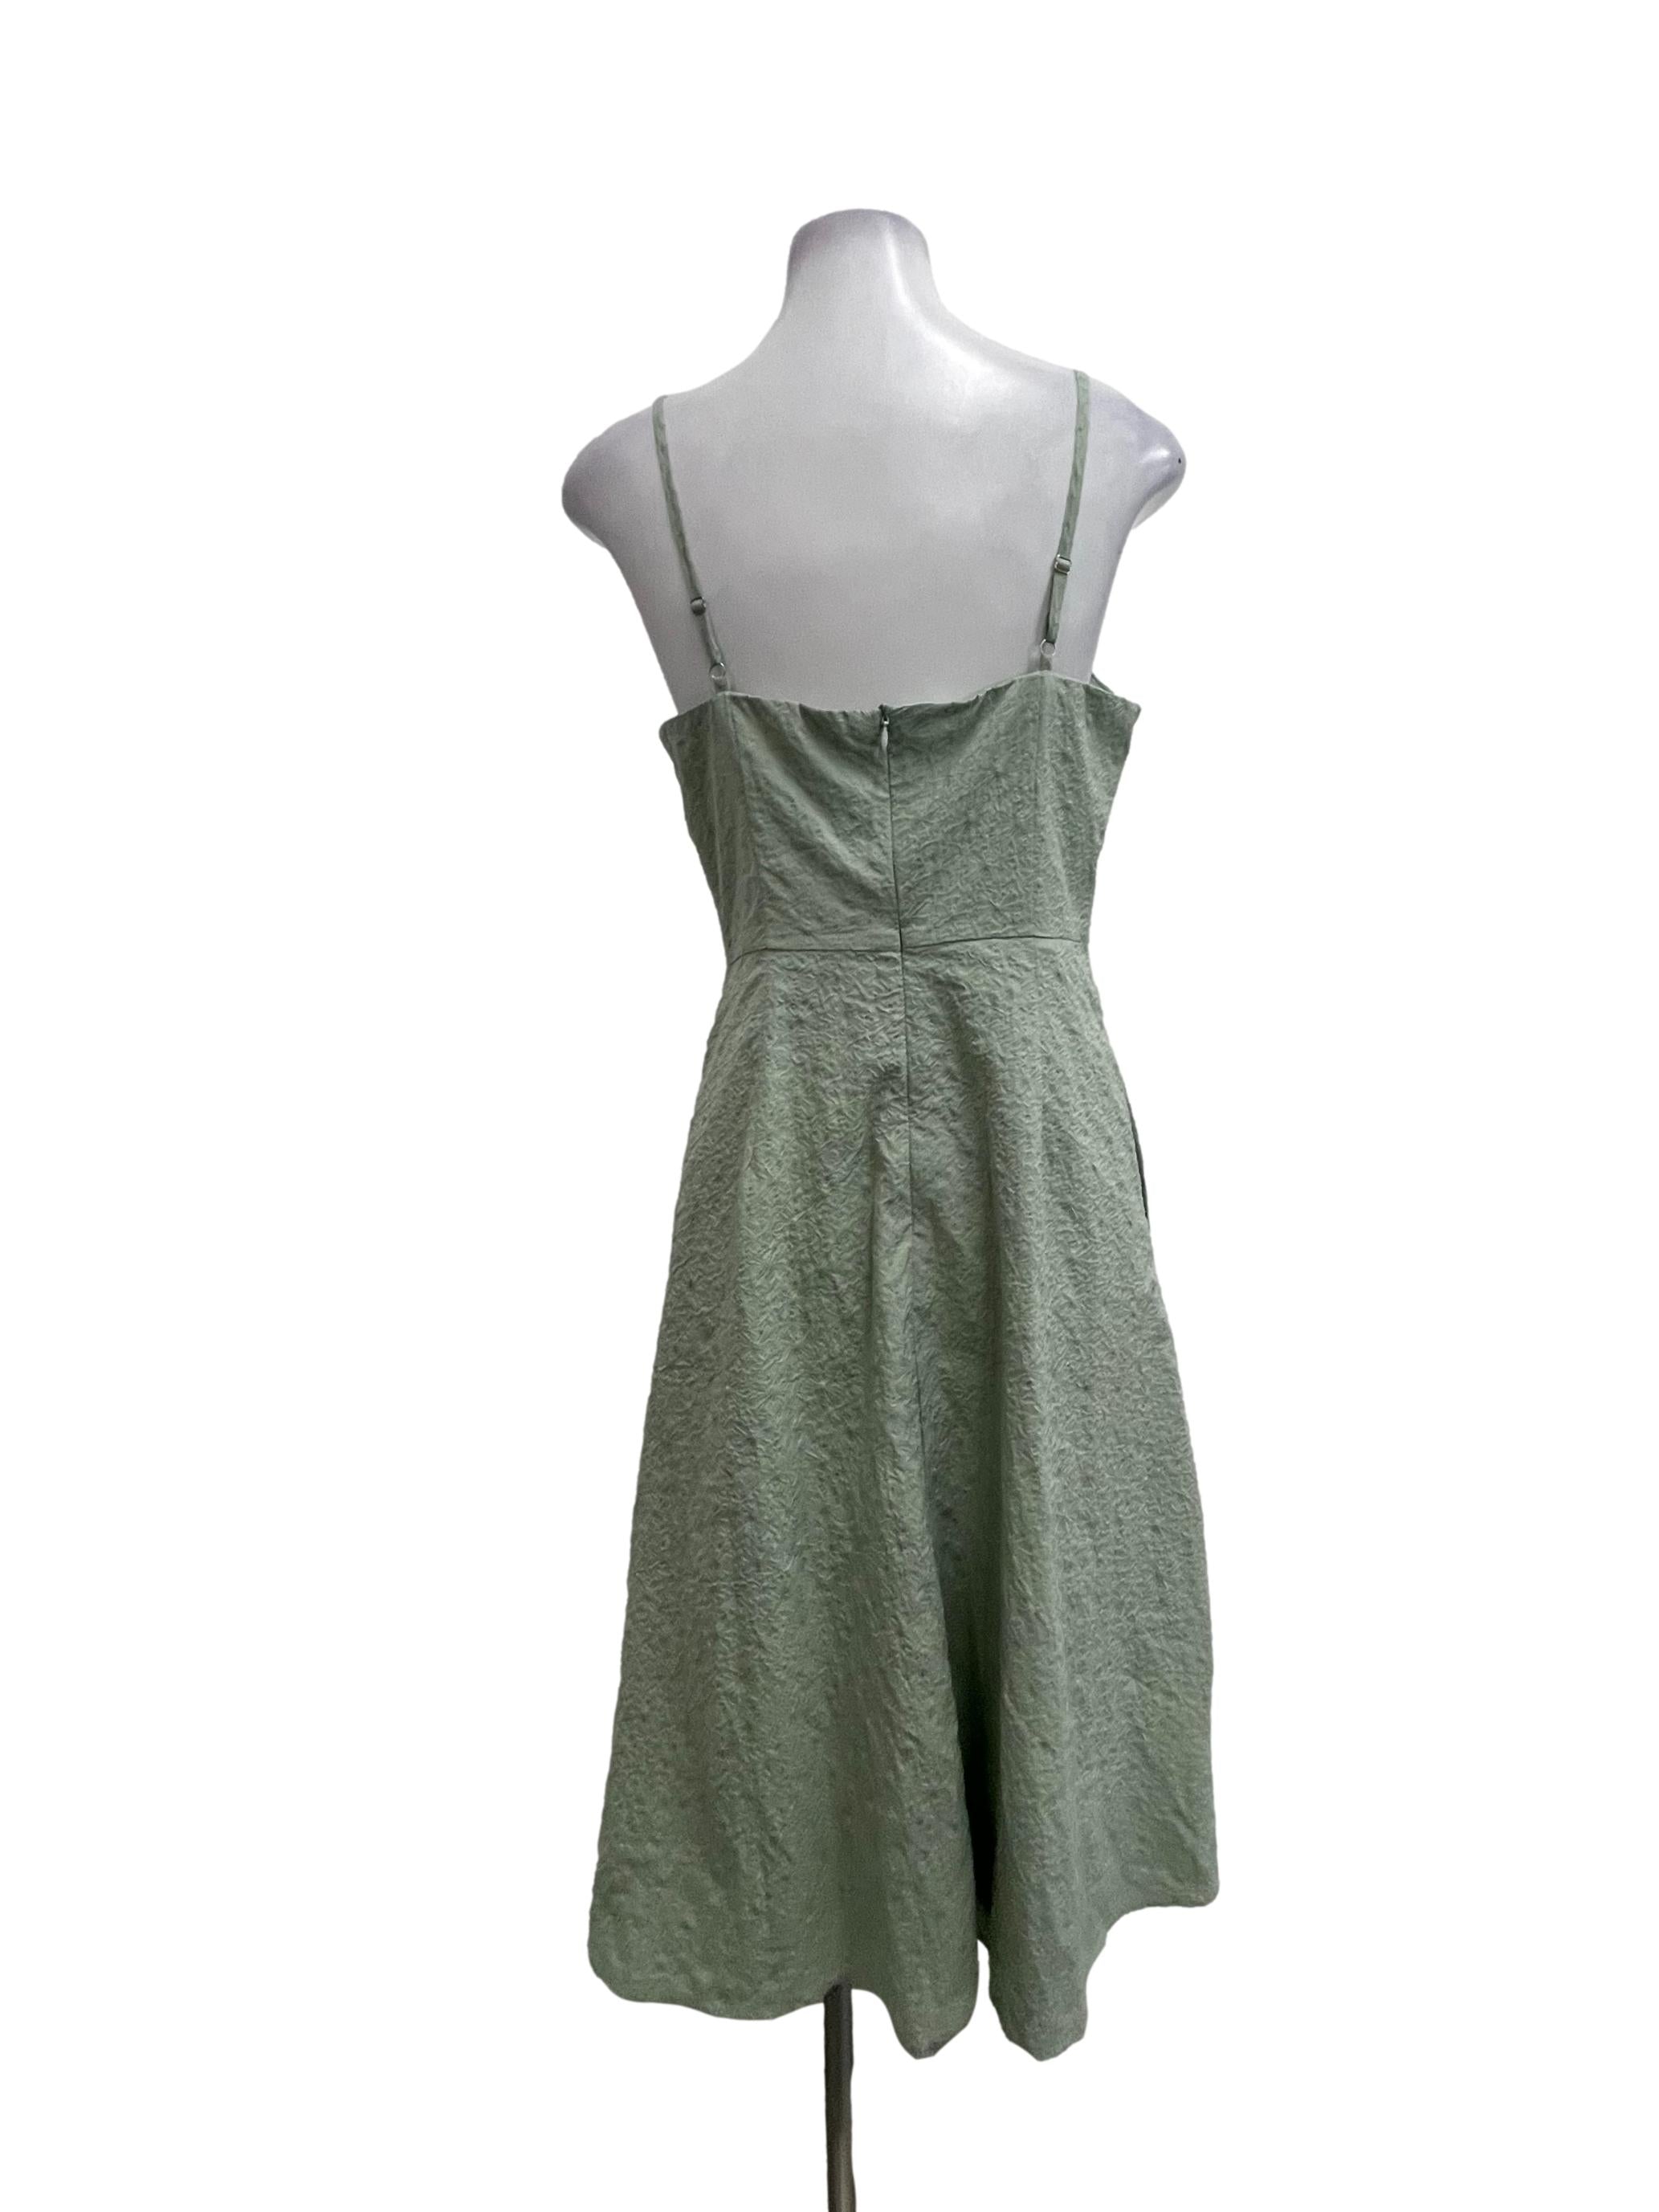 Green Floral Textured Spag Dress